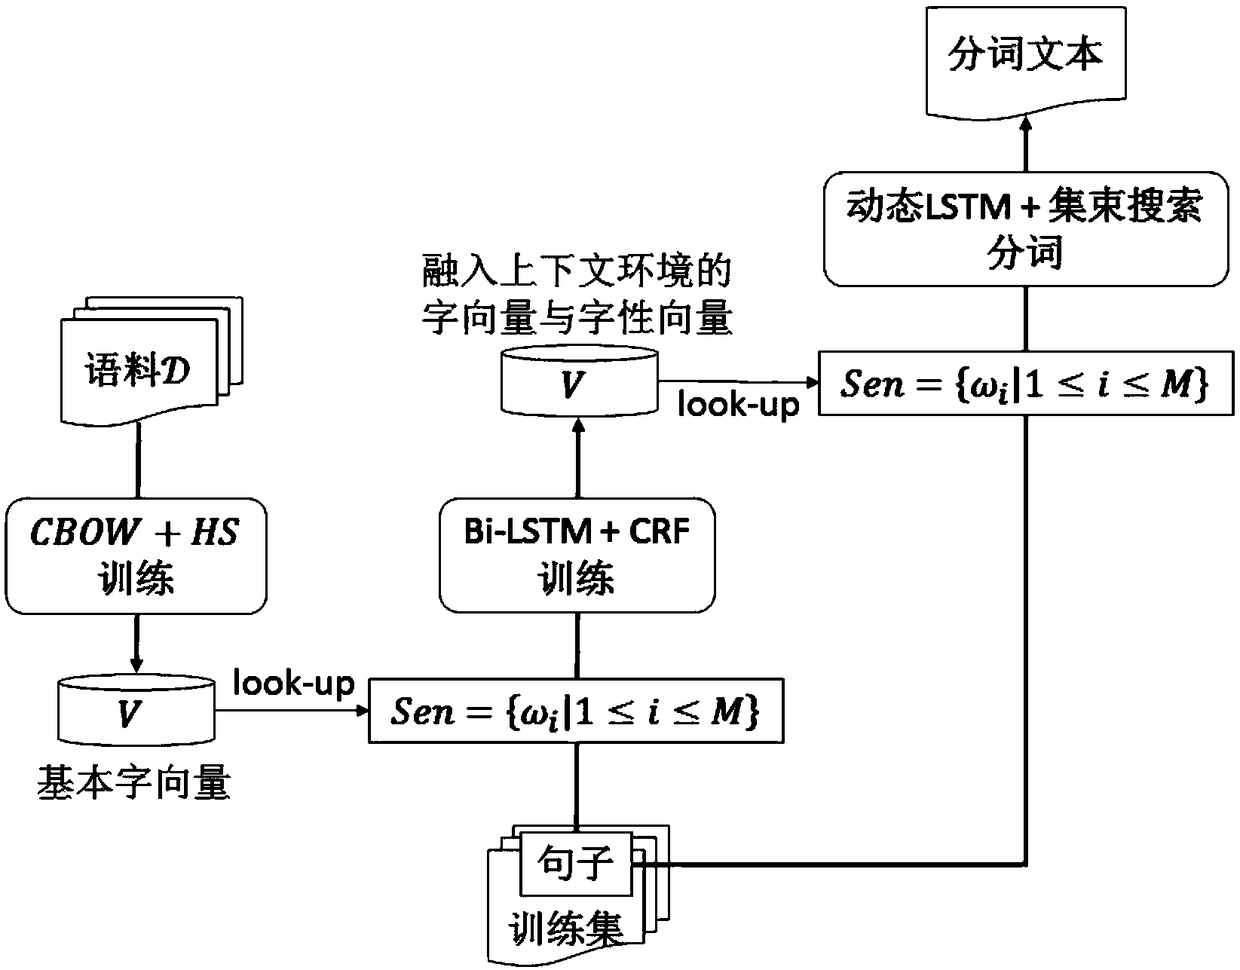 A Chinese word segmentation method based on depth learning